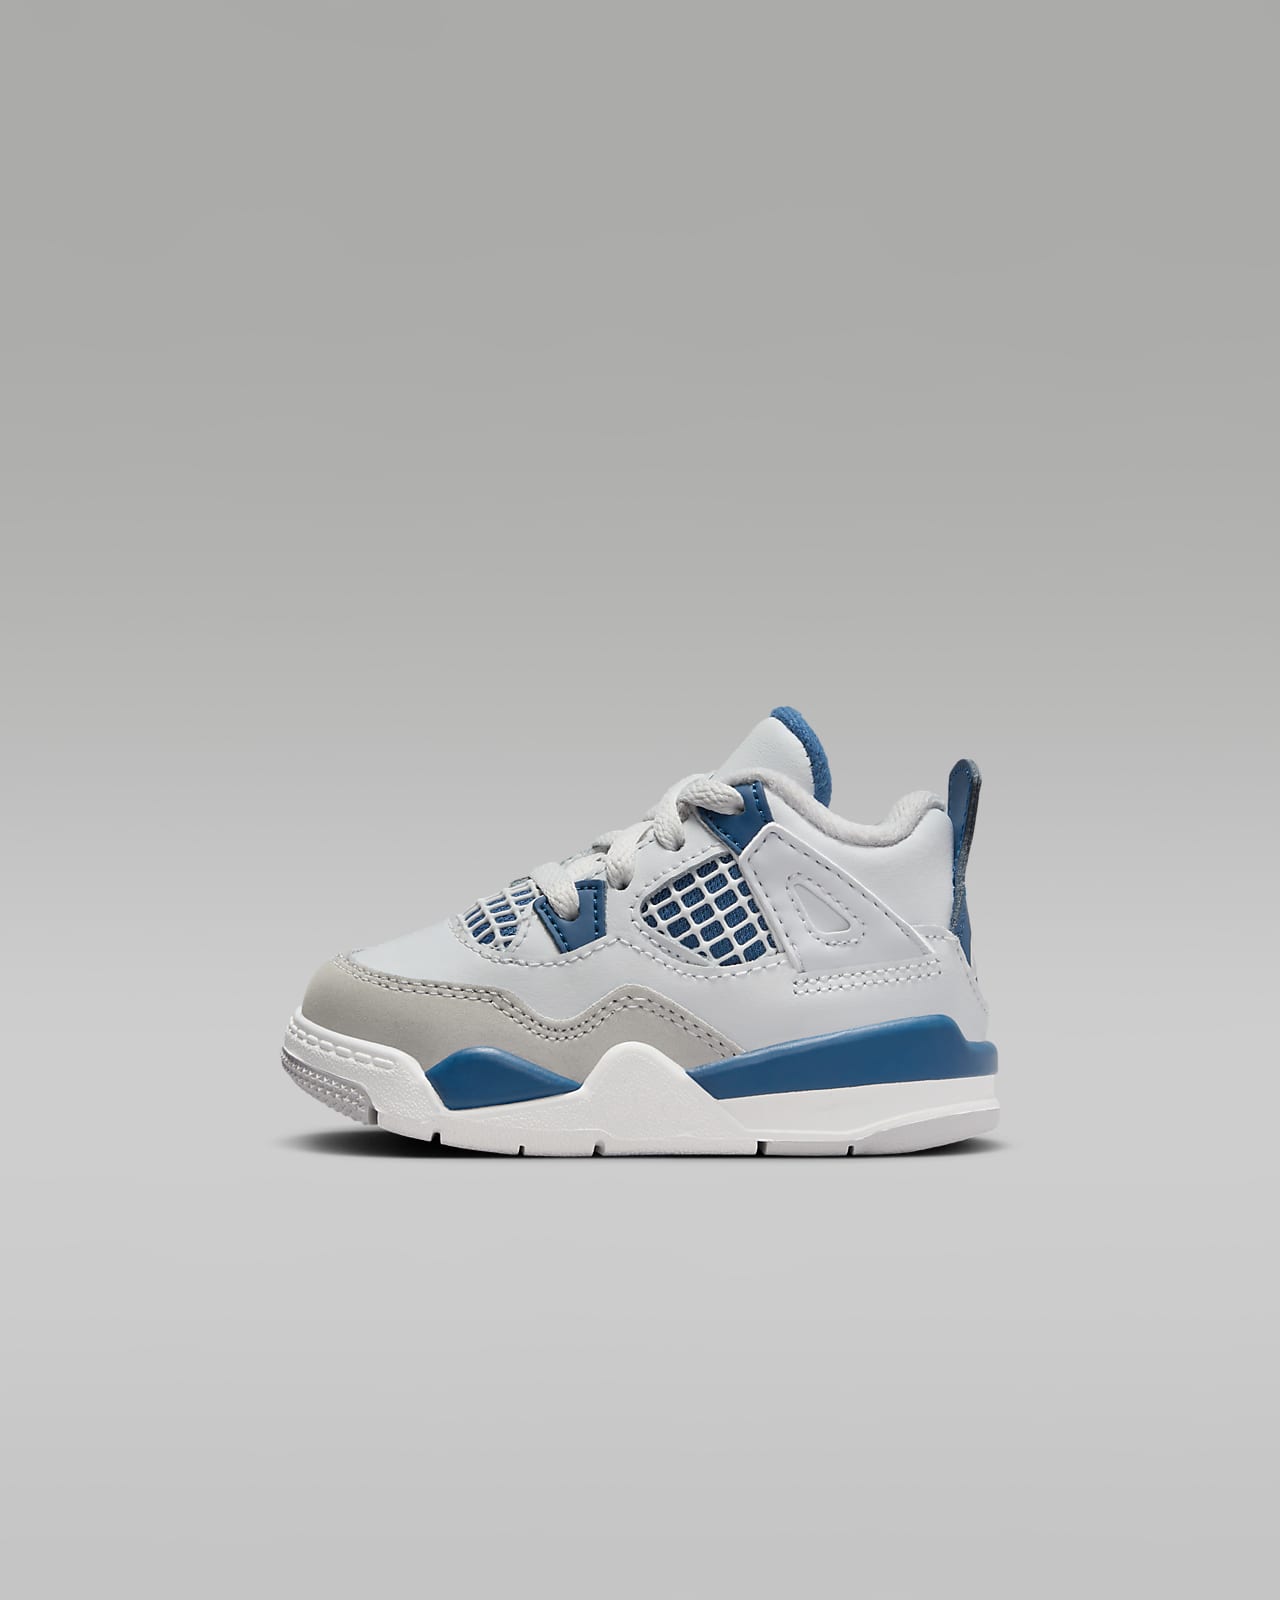 Jordan 4 Retro "Industrial Blue" Baby/Toddler Shoes